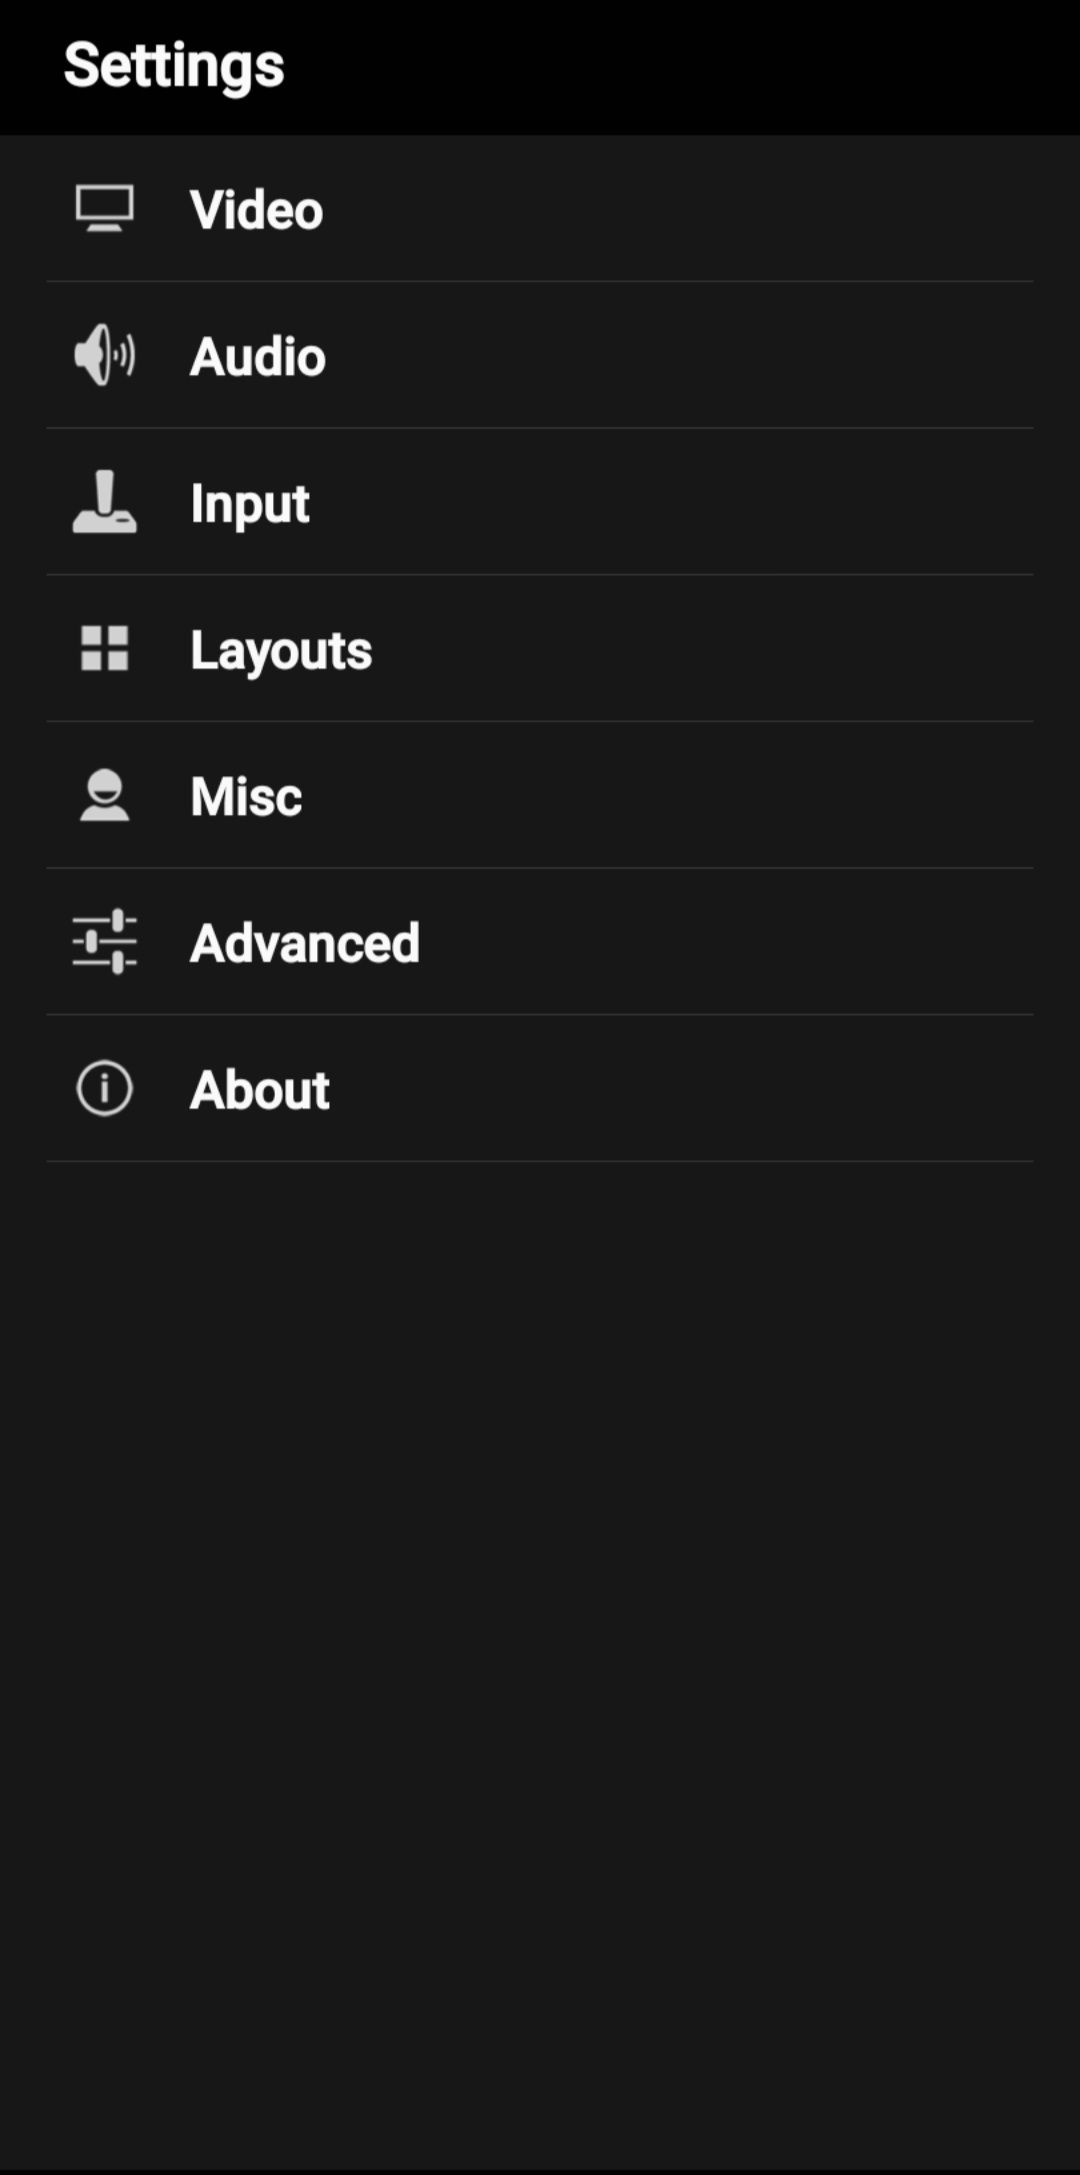 My OldBoy! screenshot options menu